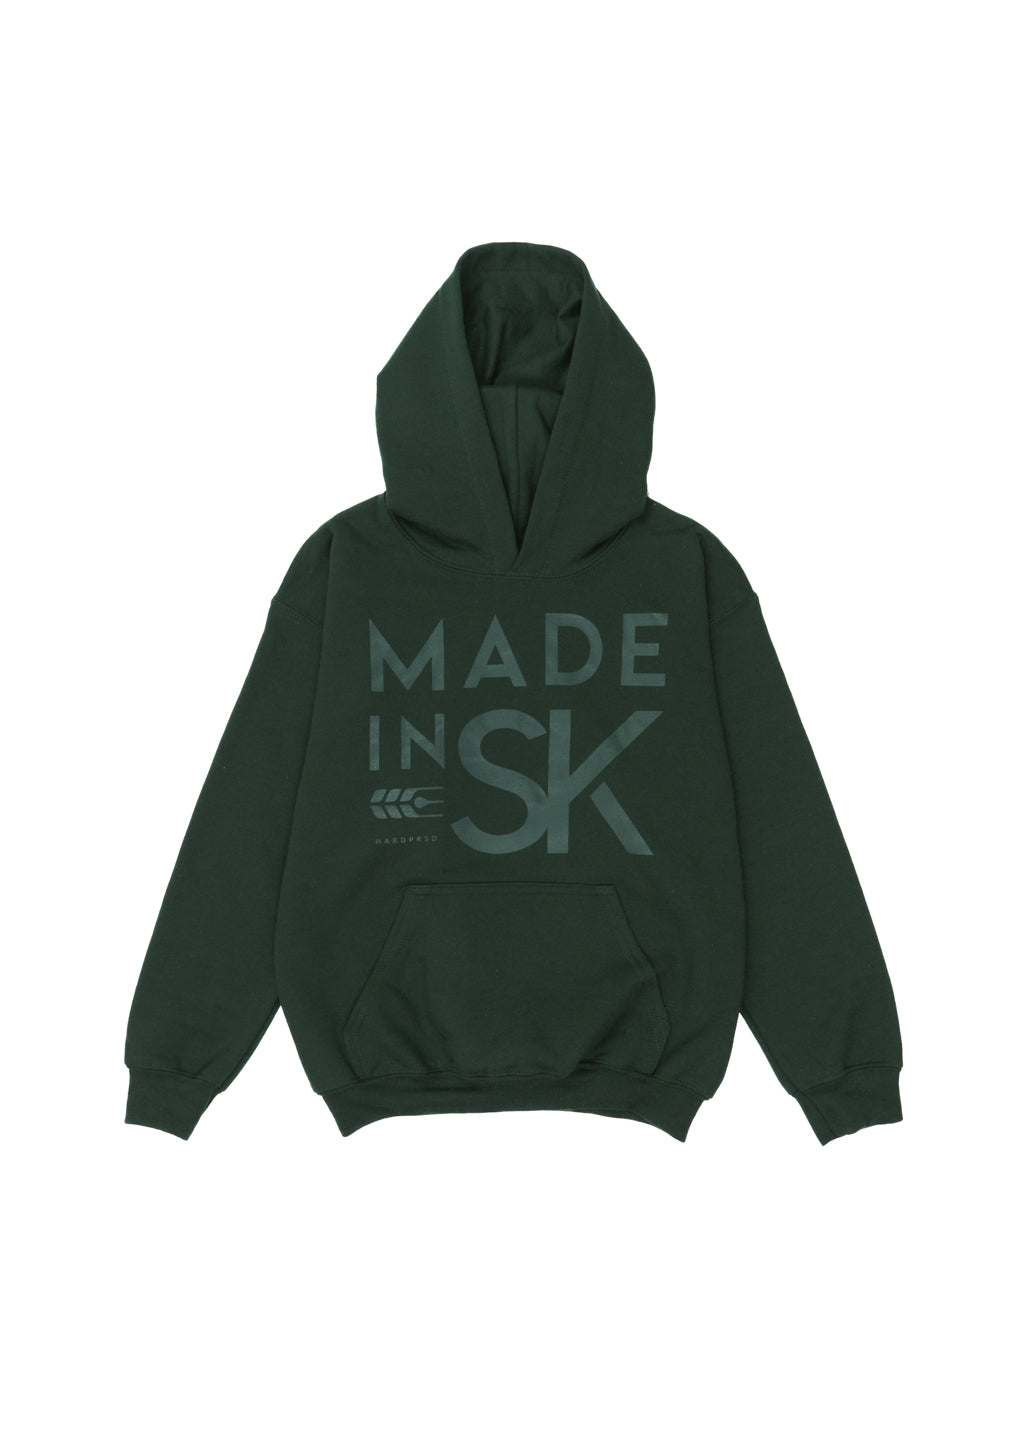 Made in SK Sweater | Boreal | Kids - Hardpressed Print Studio Inc.